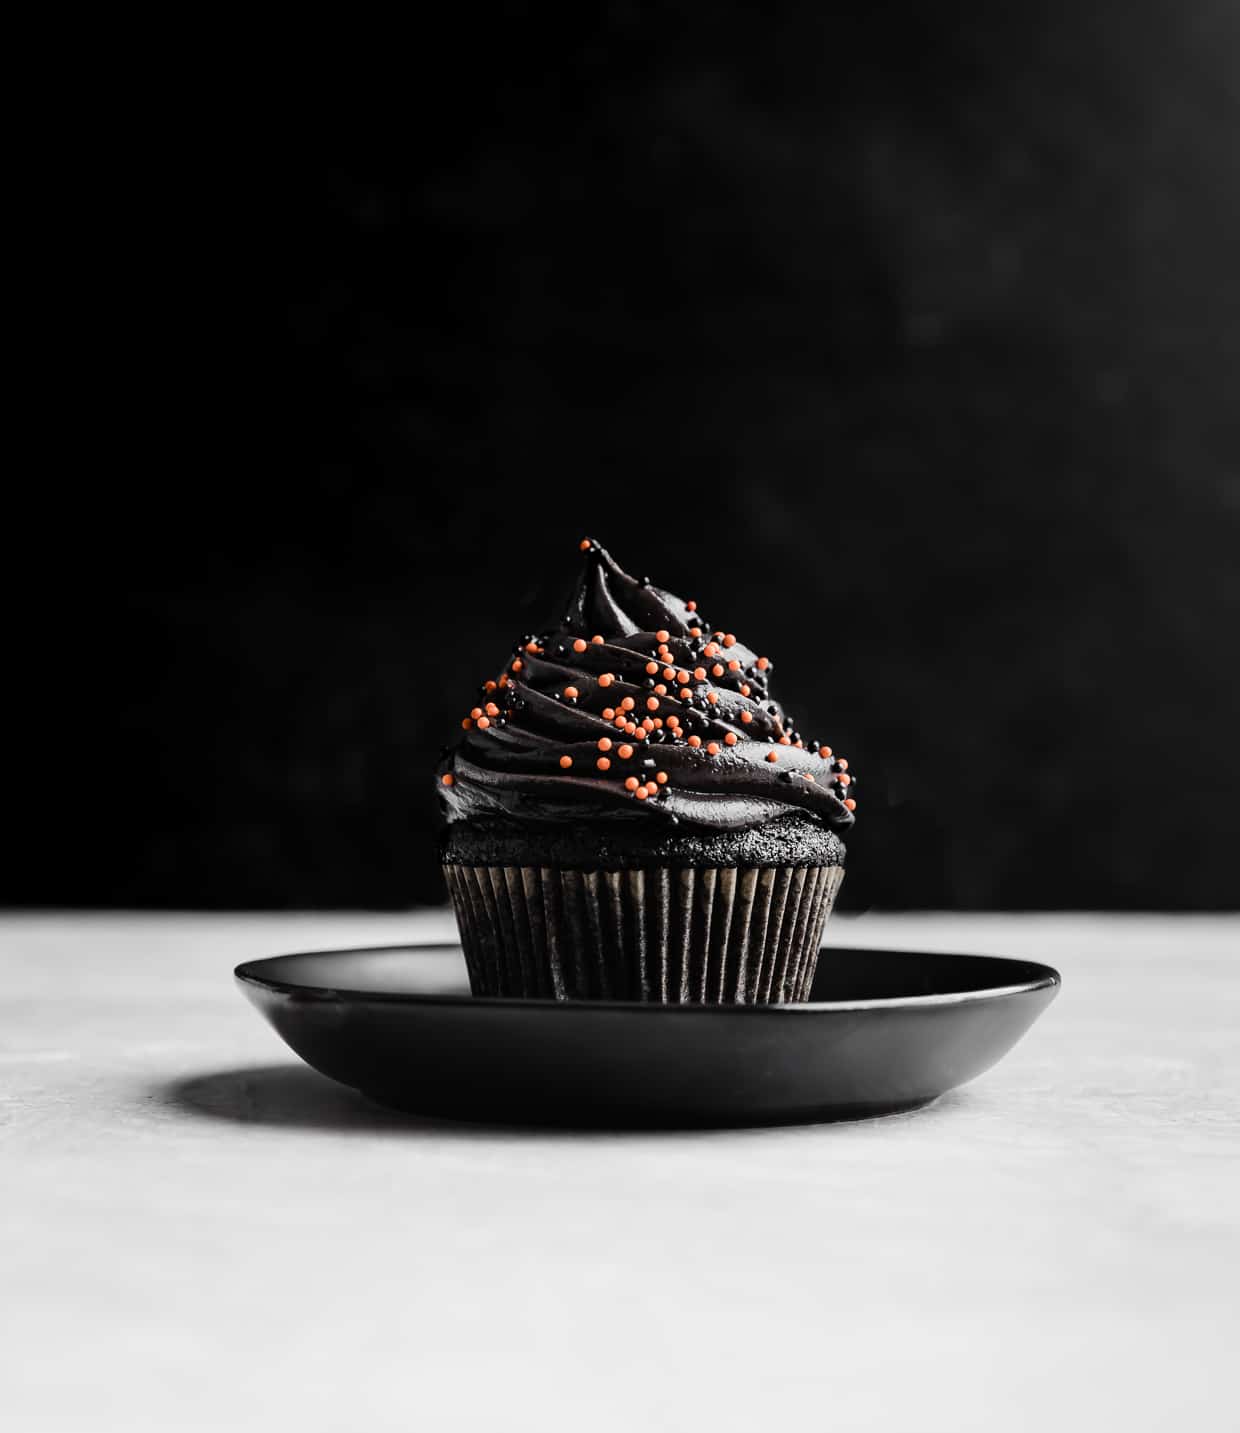 A single Black Velvet Cupcakes on a black plate.